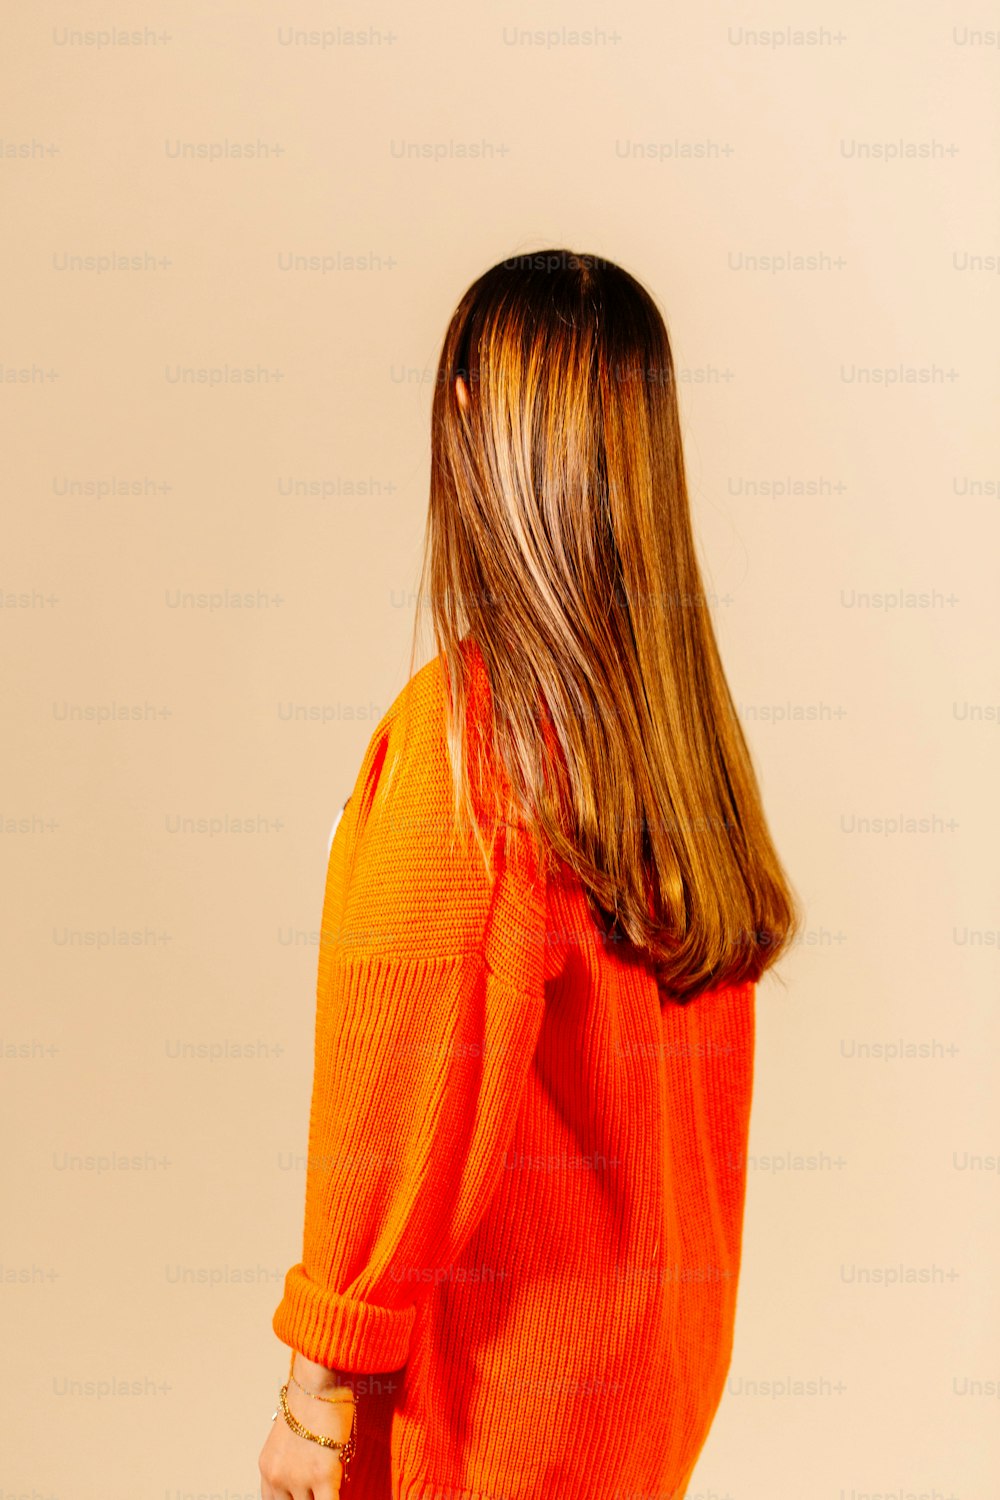 the back of a woman's head wearing an orange sweater